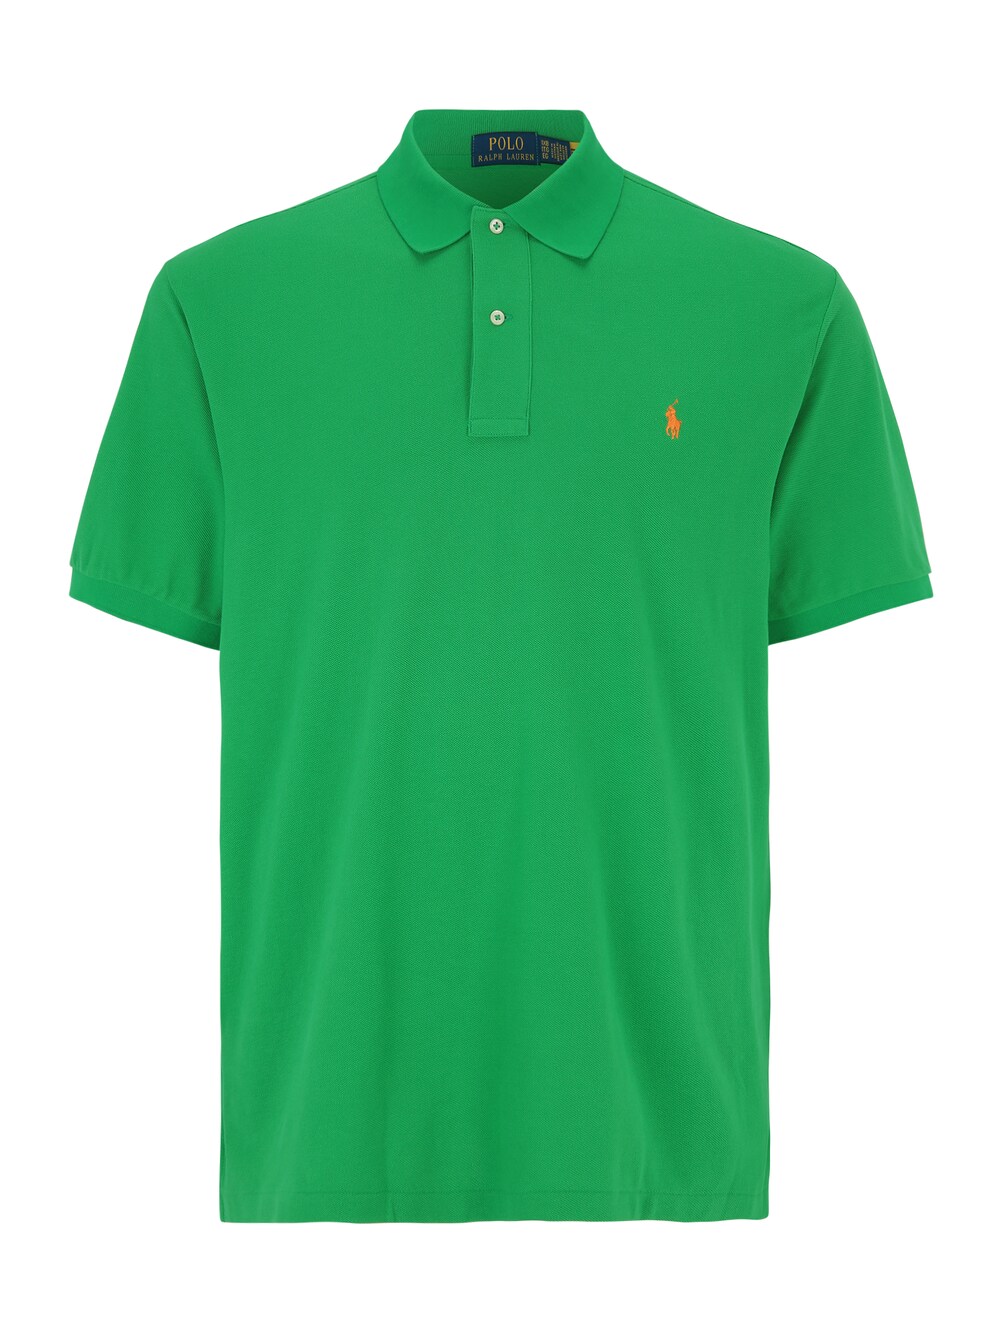 Футболка Polo Ralph Lauren Big & Tall, зеленый базовая футболка polo ralph lauren big